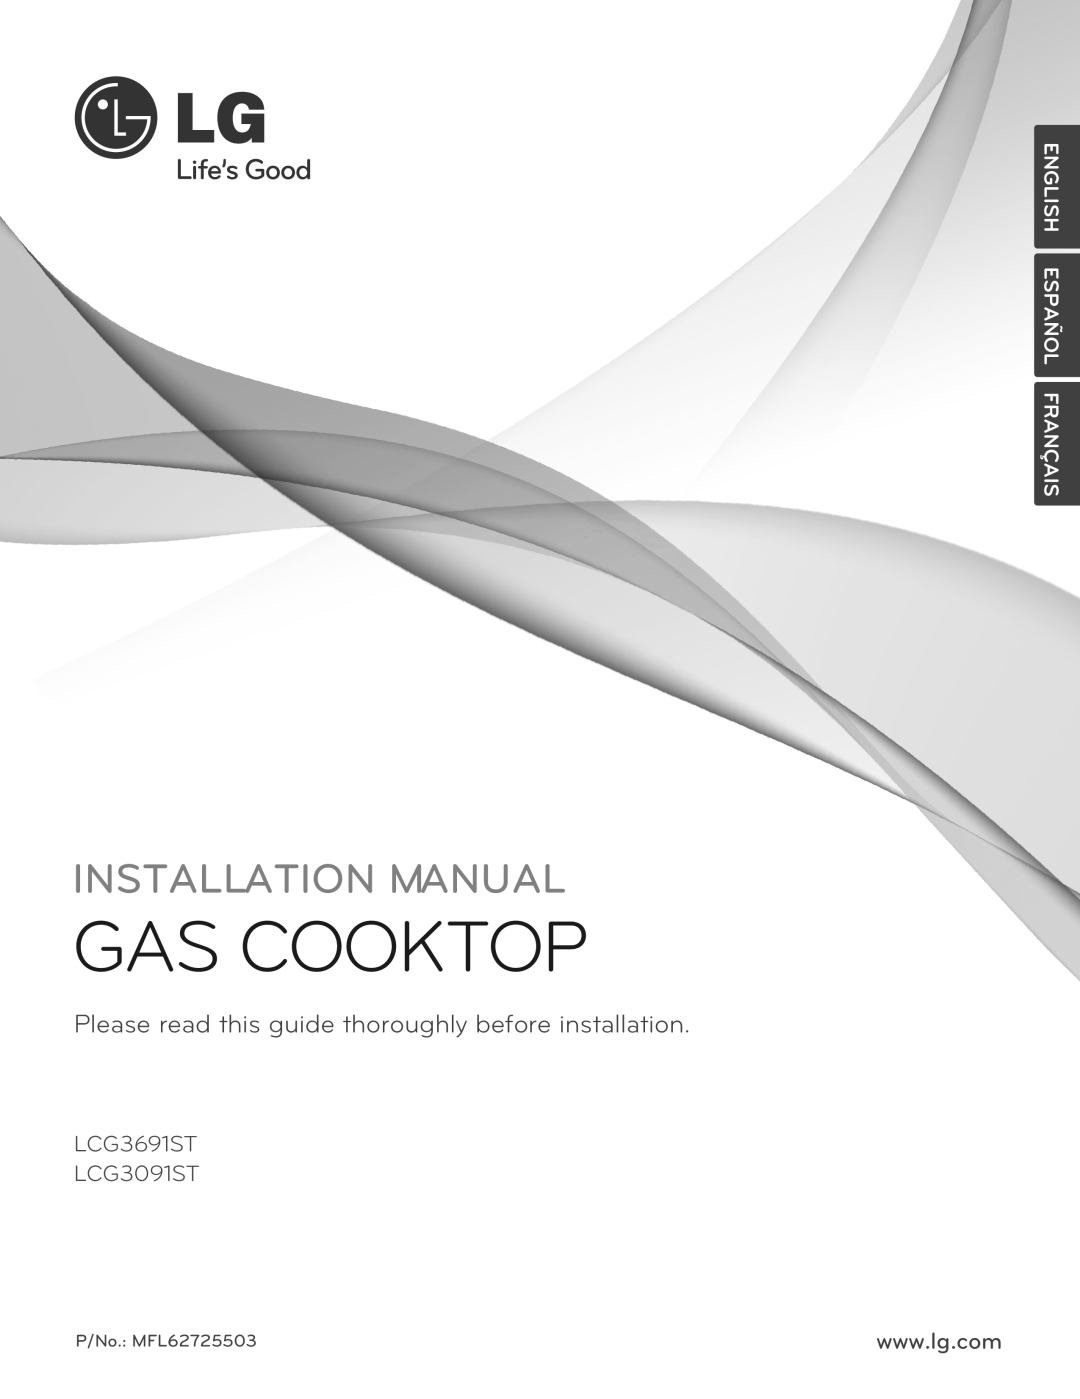 LG Electronics LCG3091ST installation manual English Español Français, P/No. MFL62725503, Gas Cooktop, Installation Manual 